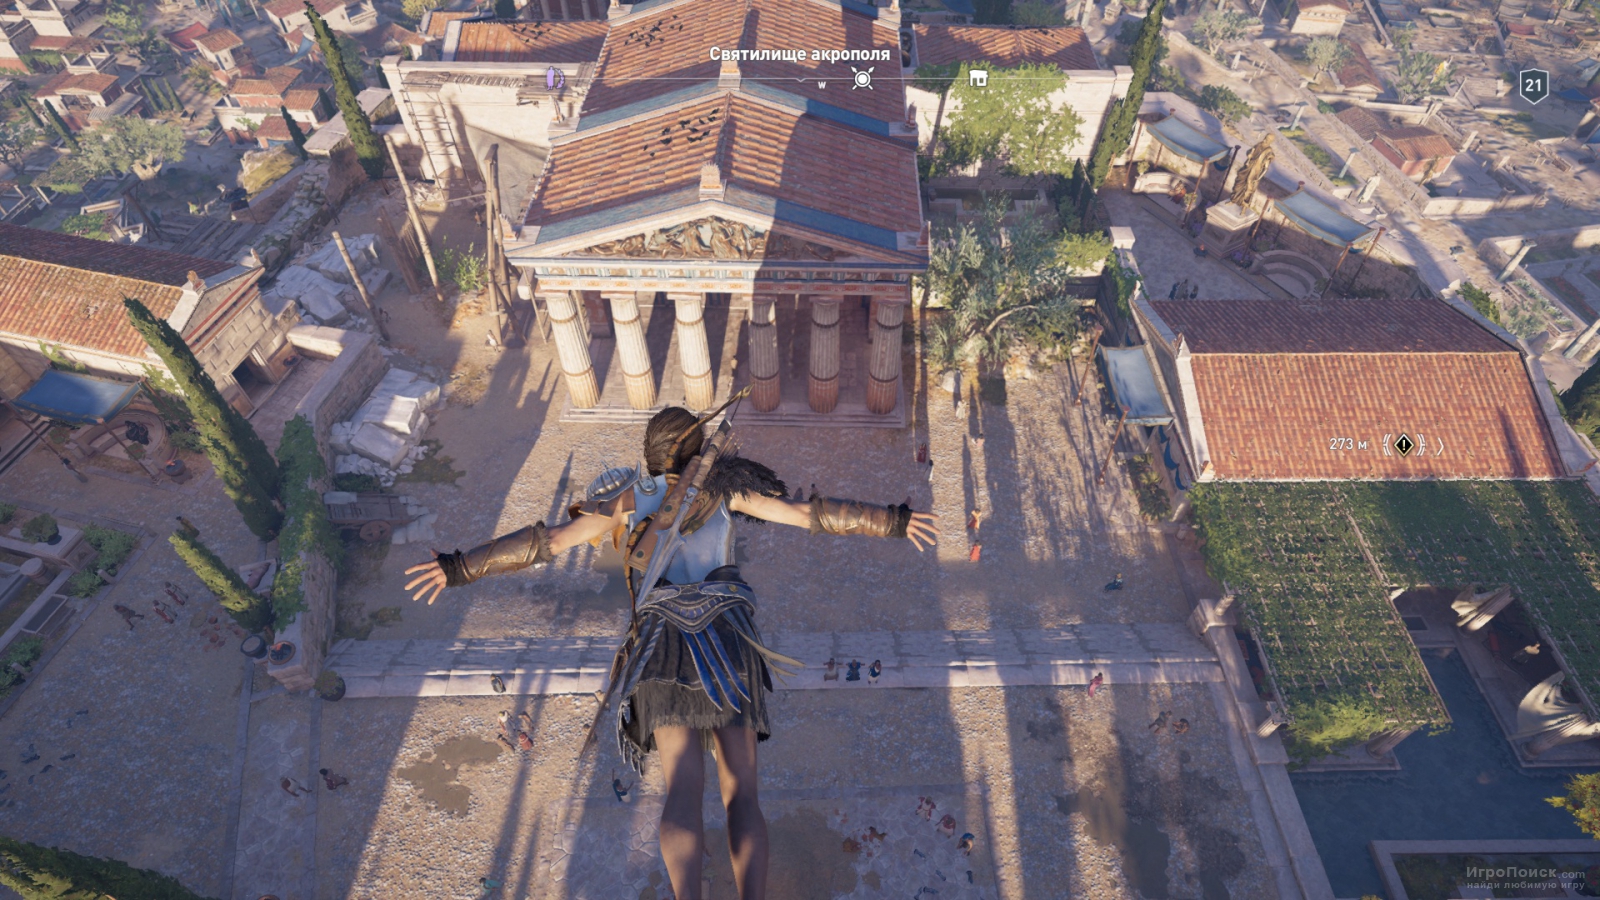 Скриншот к игре Assassin's Creed: Odyssey